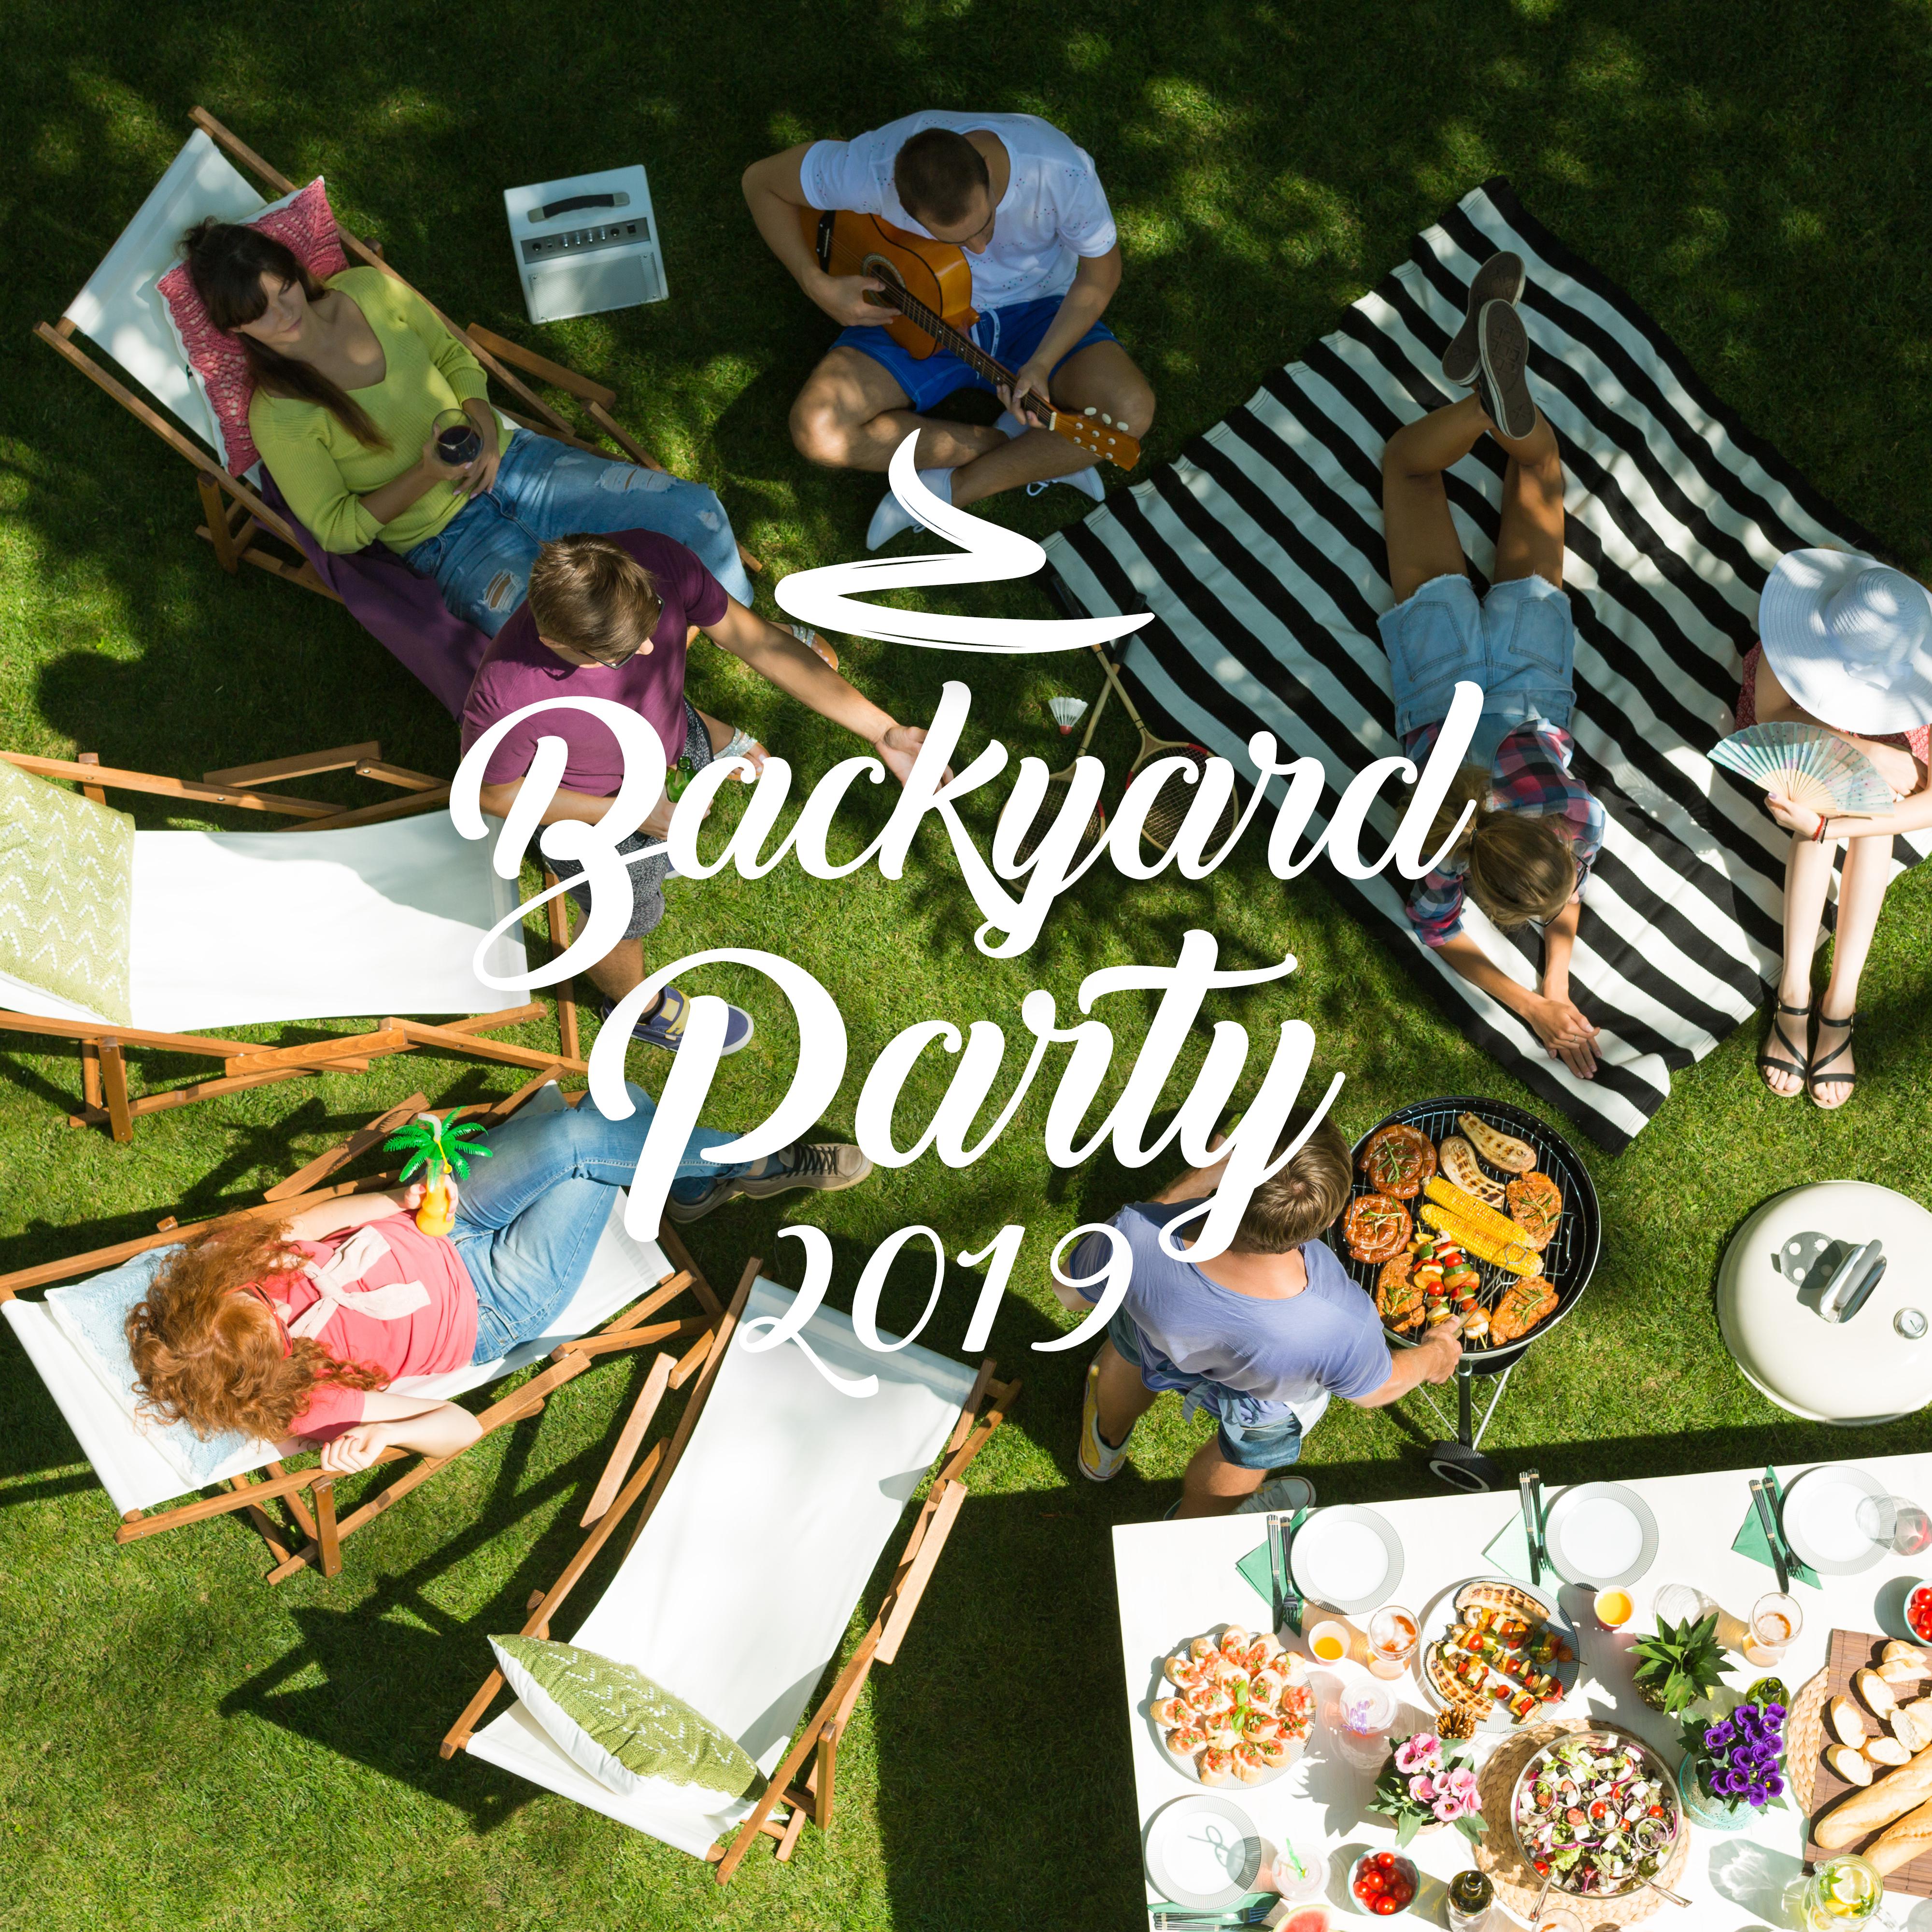 Backyard Party 2019